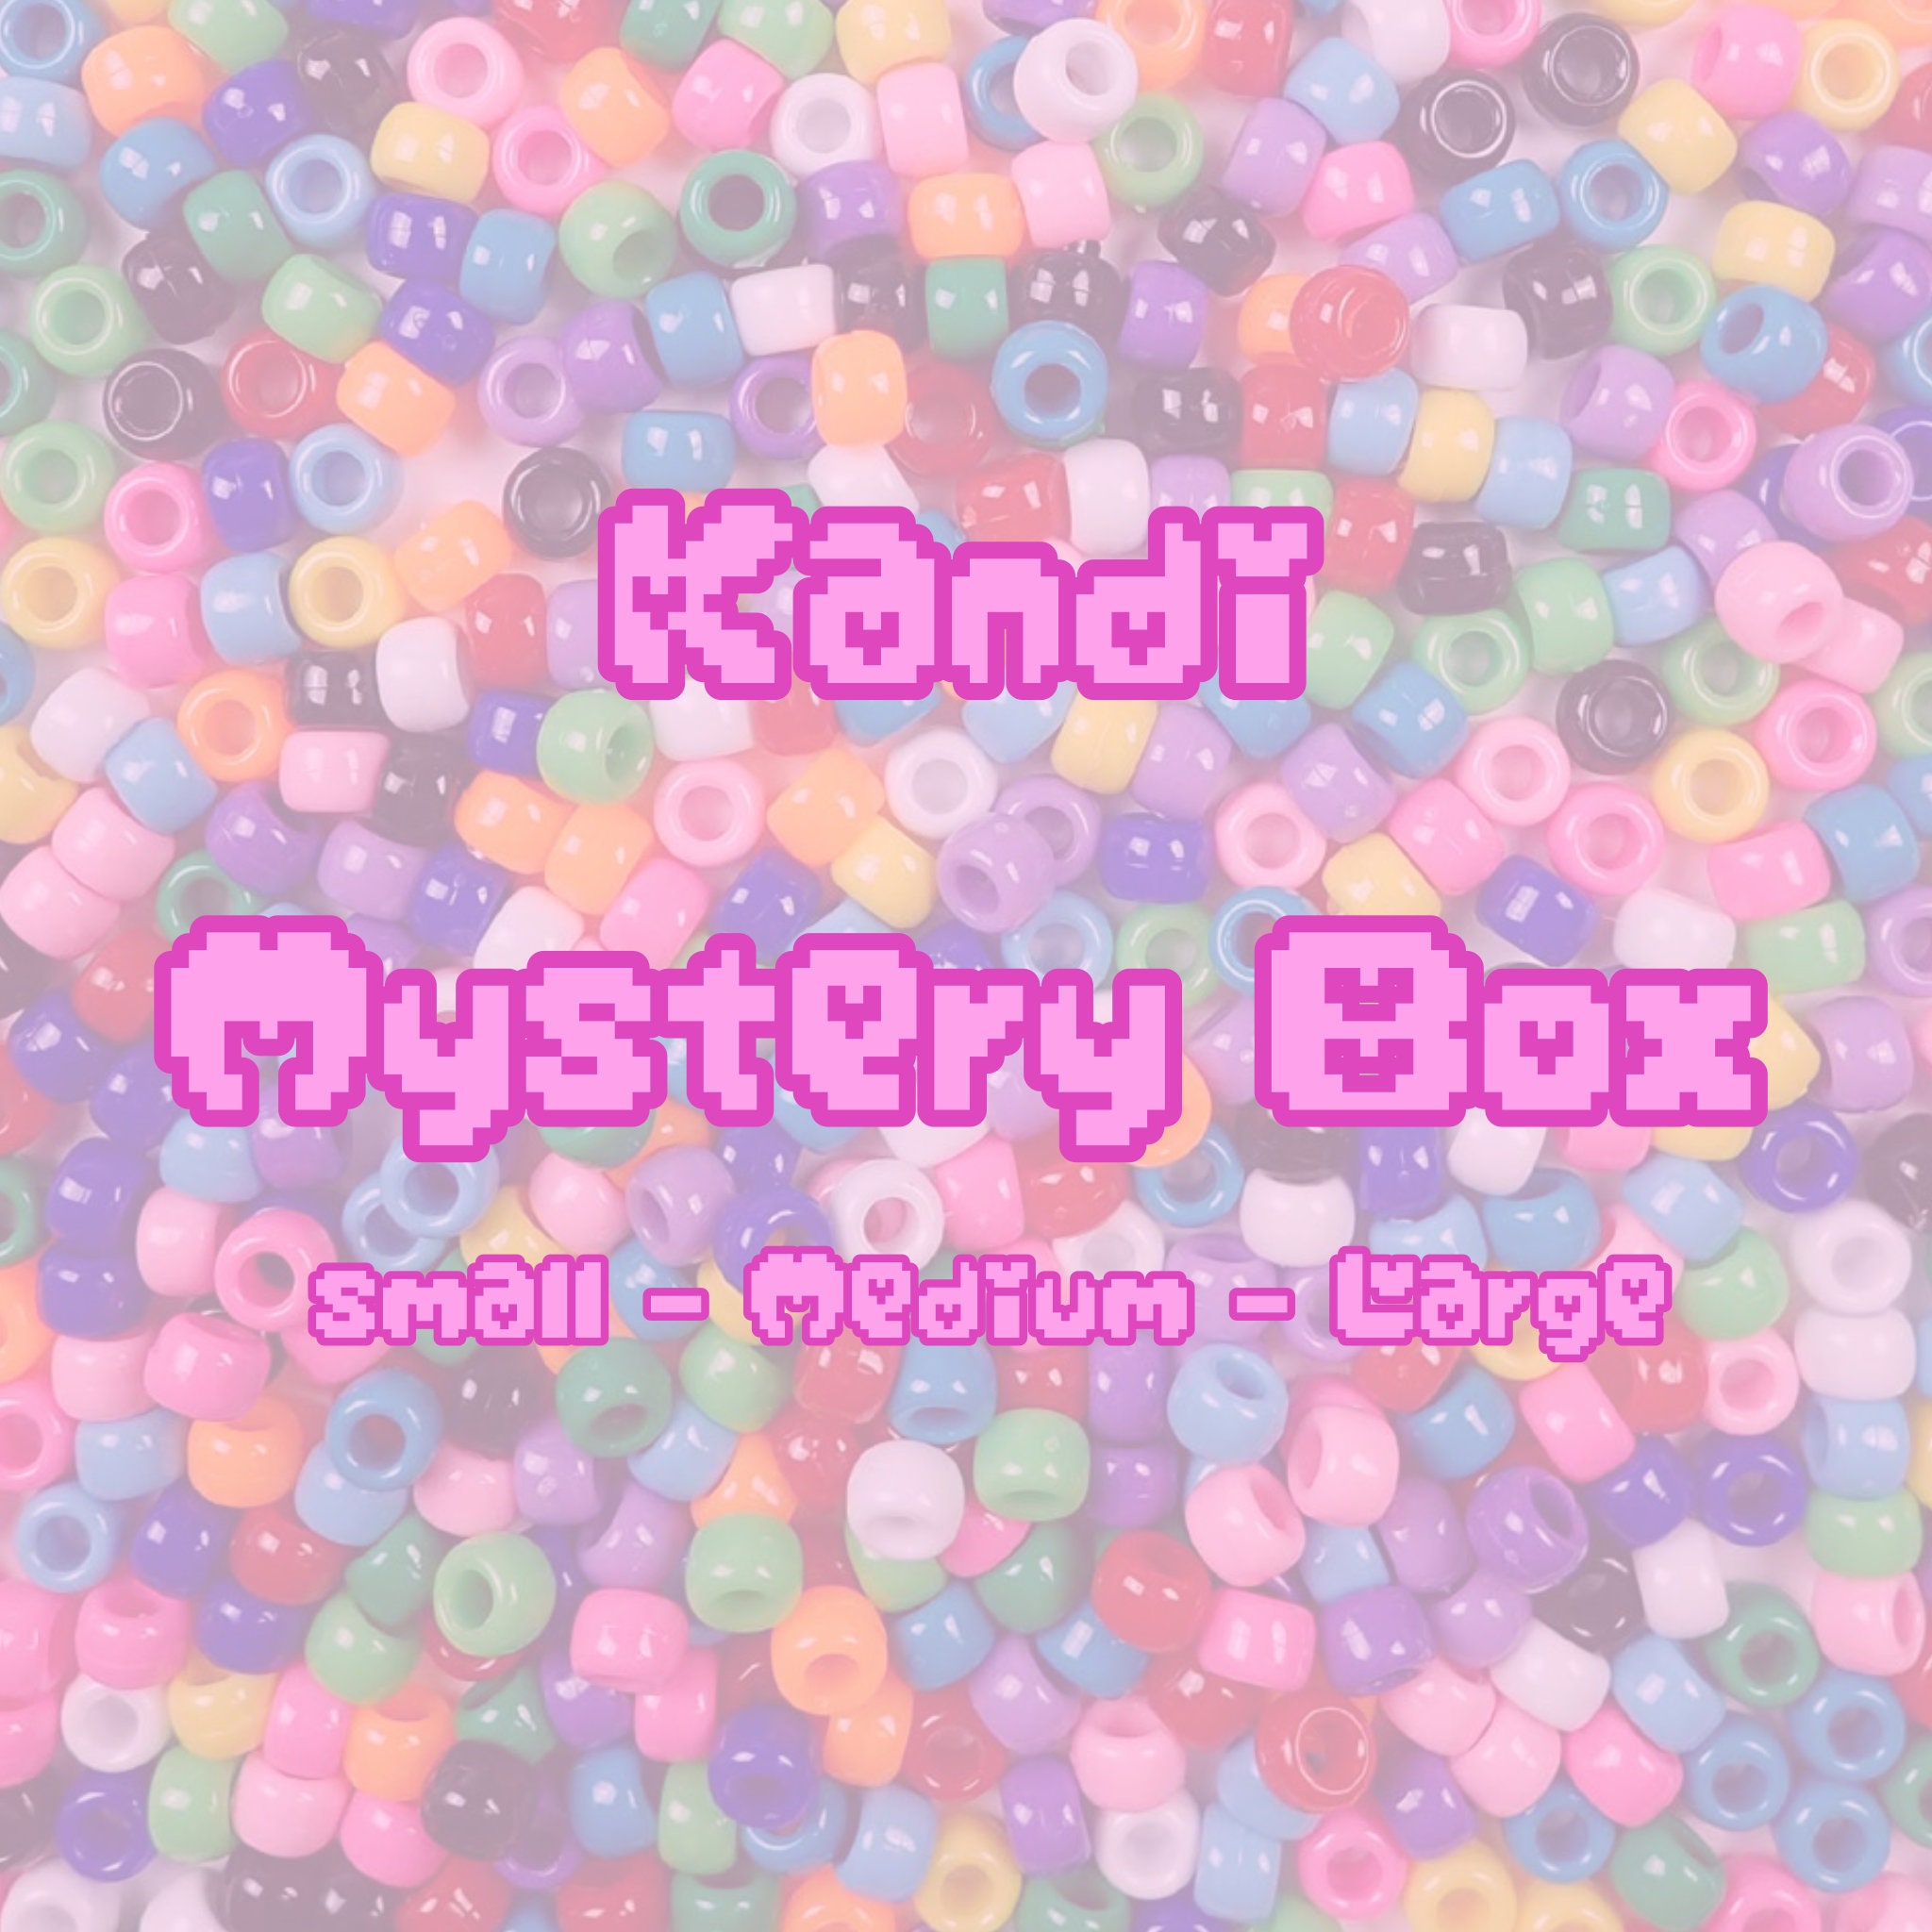 Random Kandi / Mystery Kandi / Custom Kandi / Rave Accessories